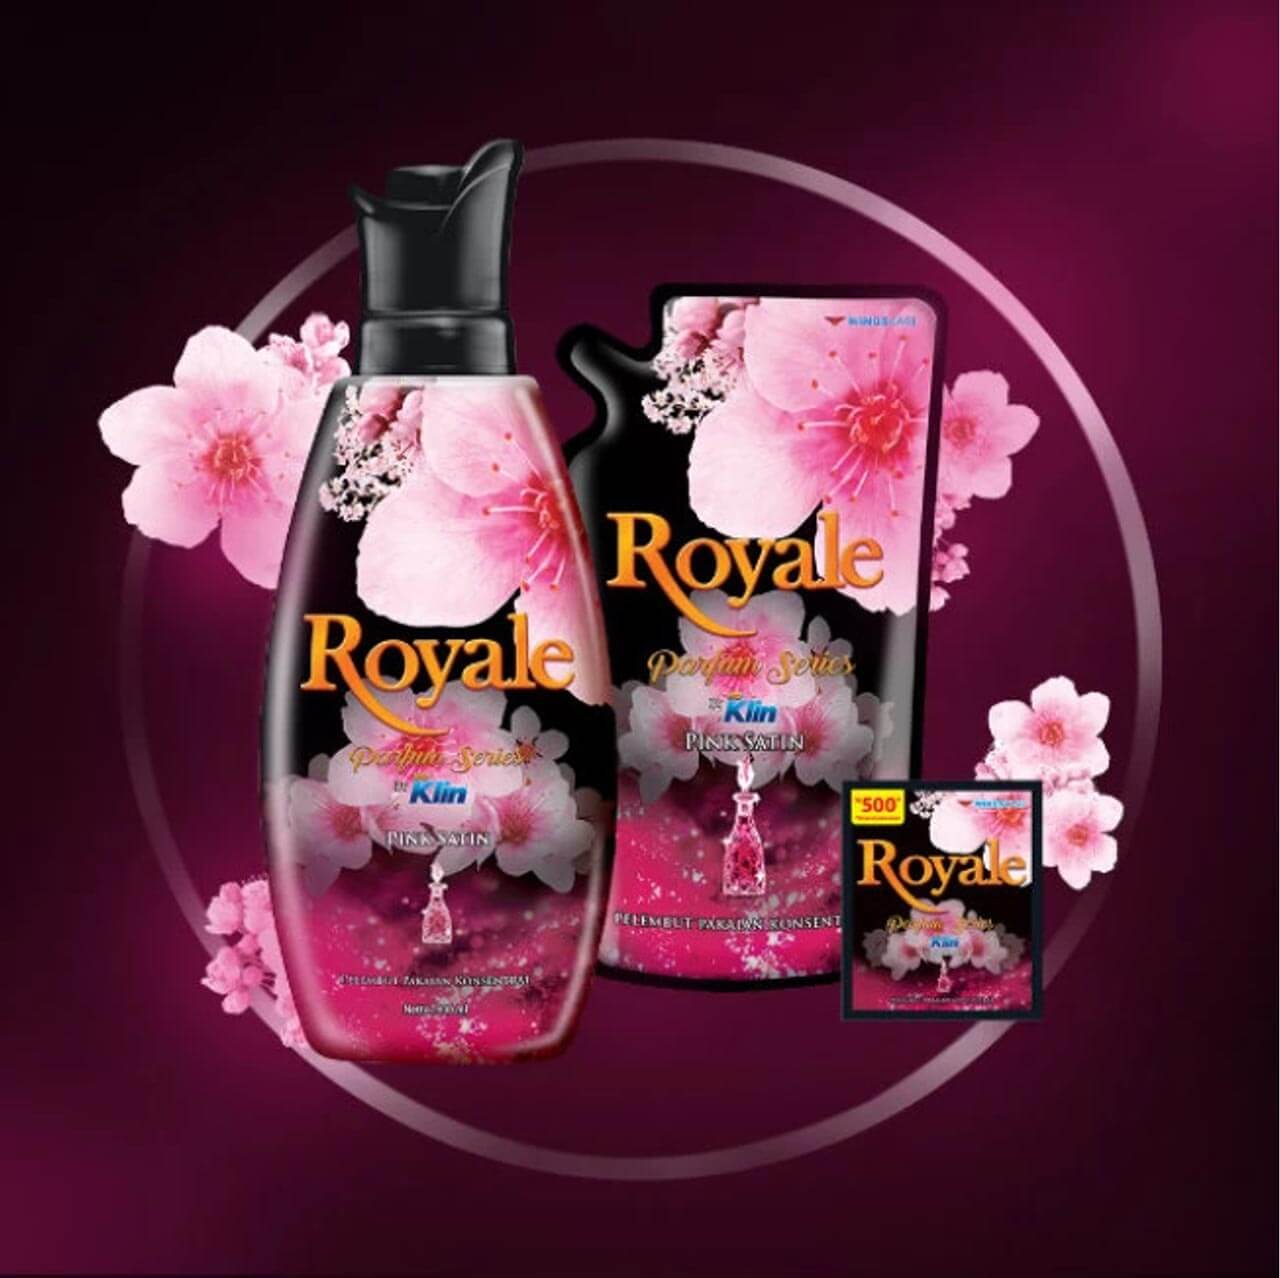 Royale Parfum Series Pink Satin